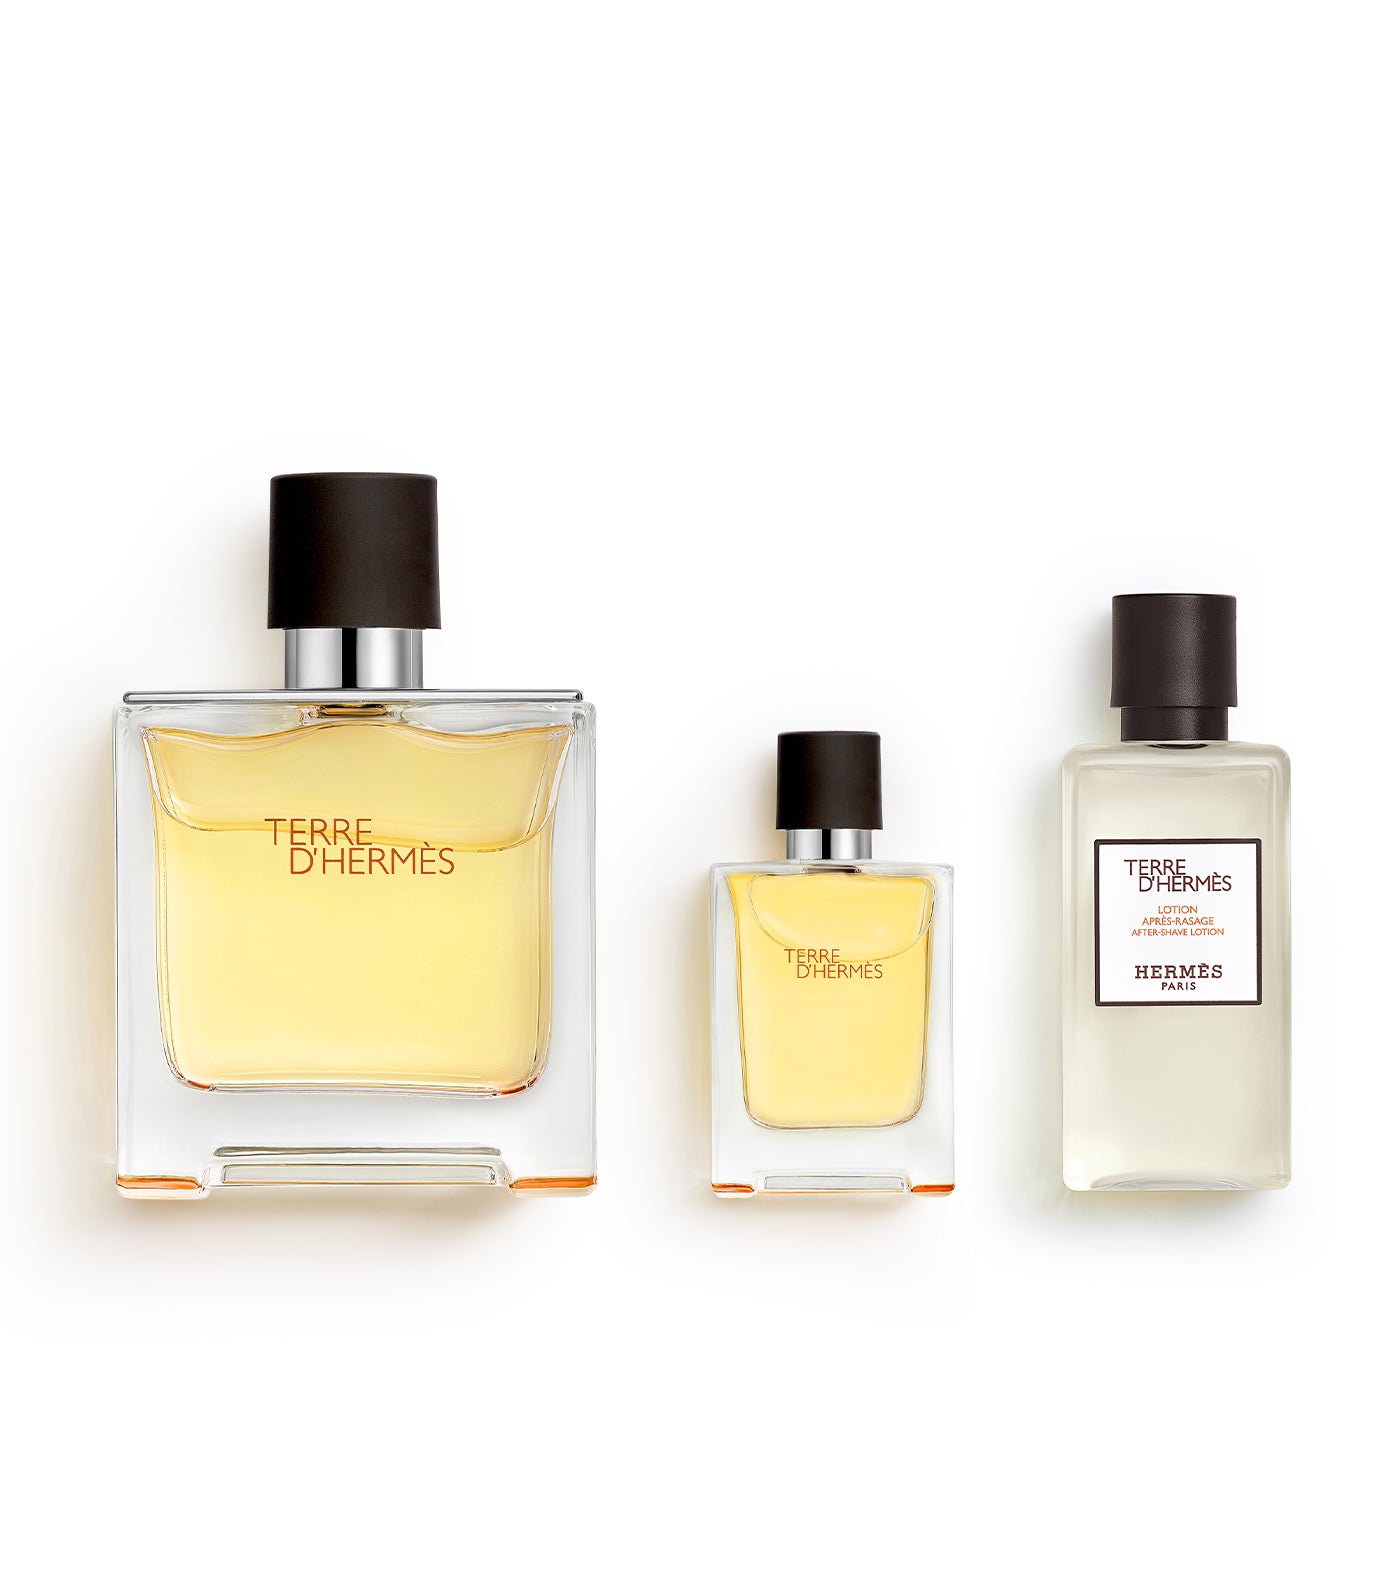 Terre d'Hermès gift set, Parfum, 75ml + 12.5ml + 40ml